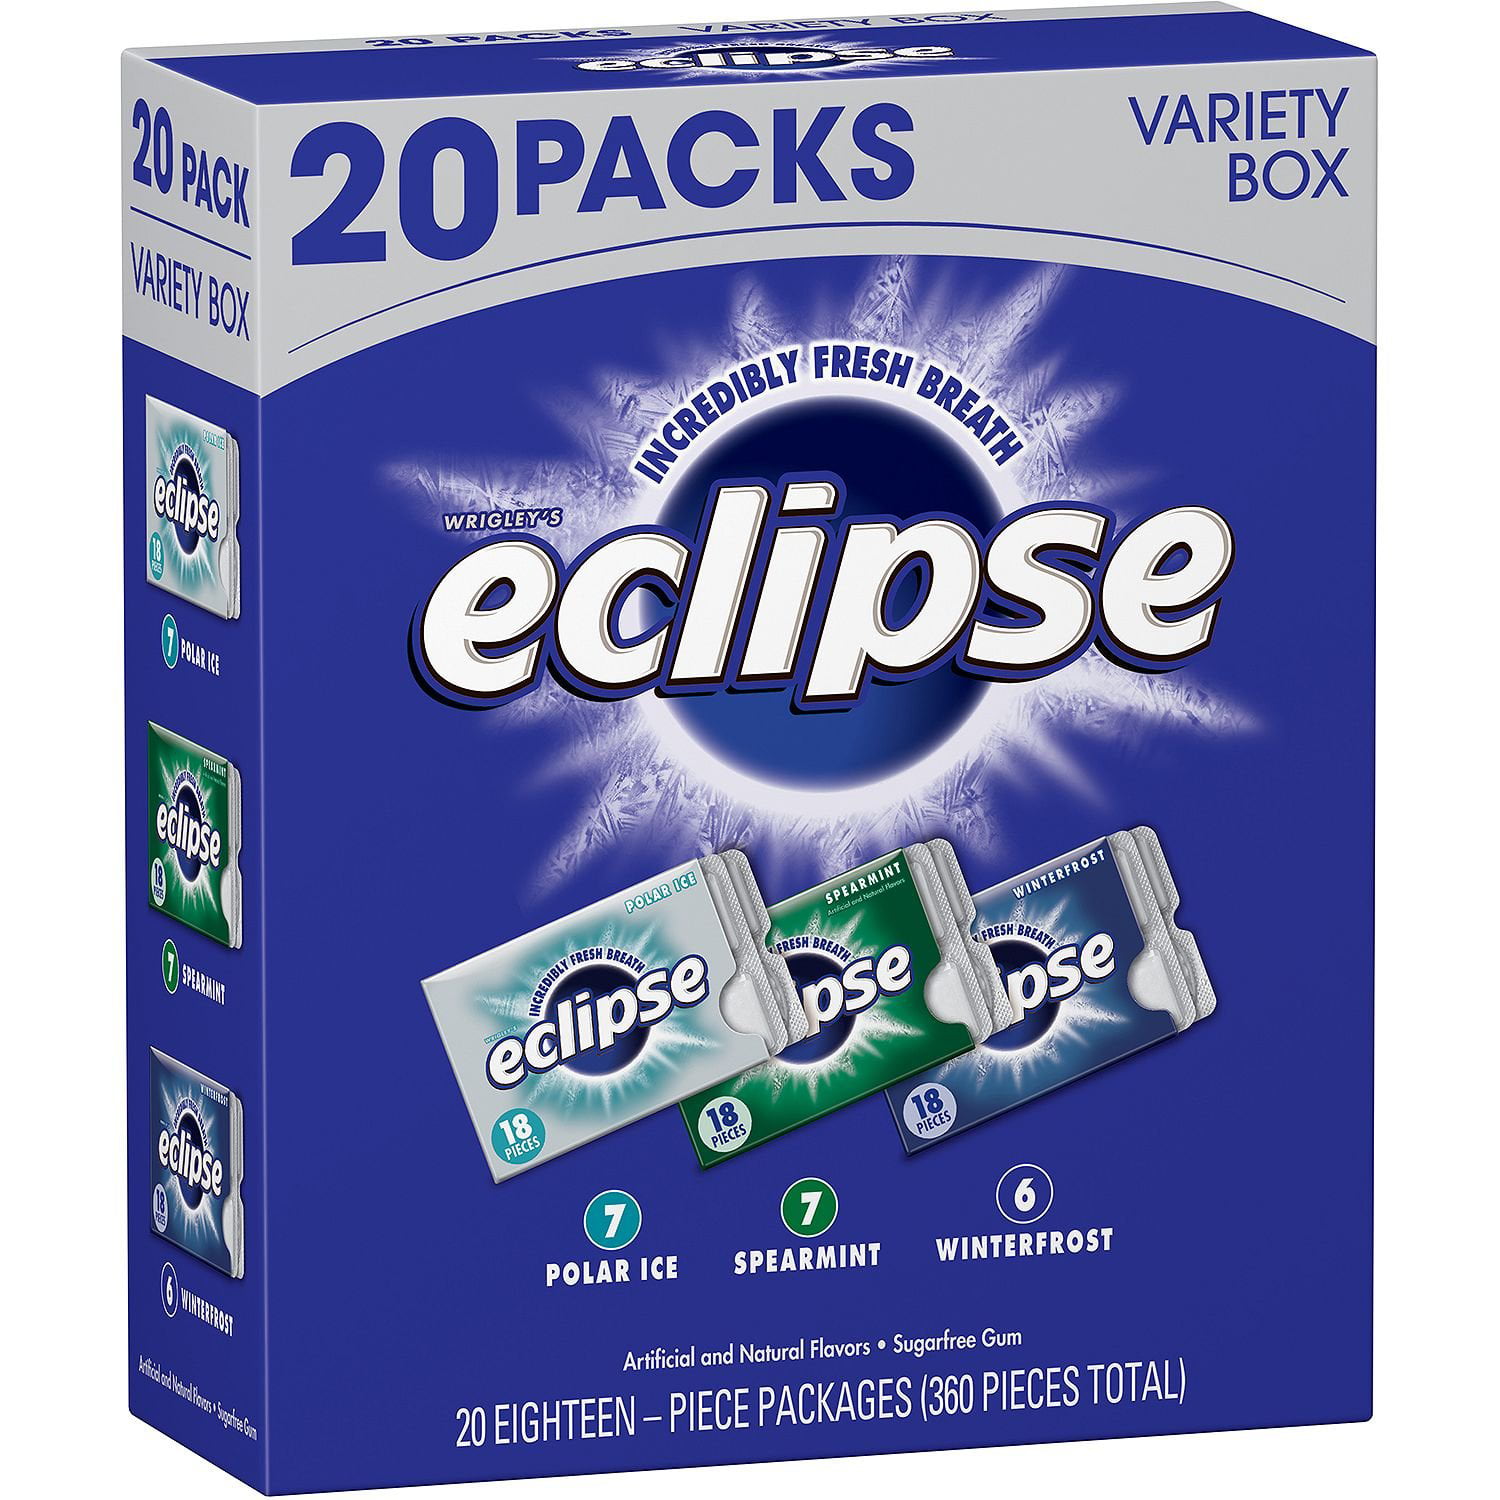 15 Year Old Pack of Eclipse Gum Versus The Current Version :  r/mildlyinteresting